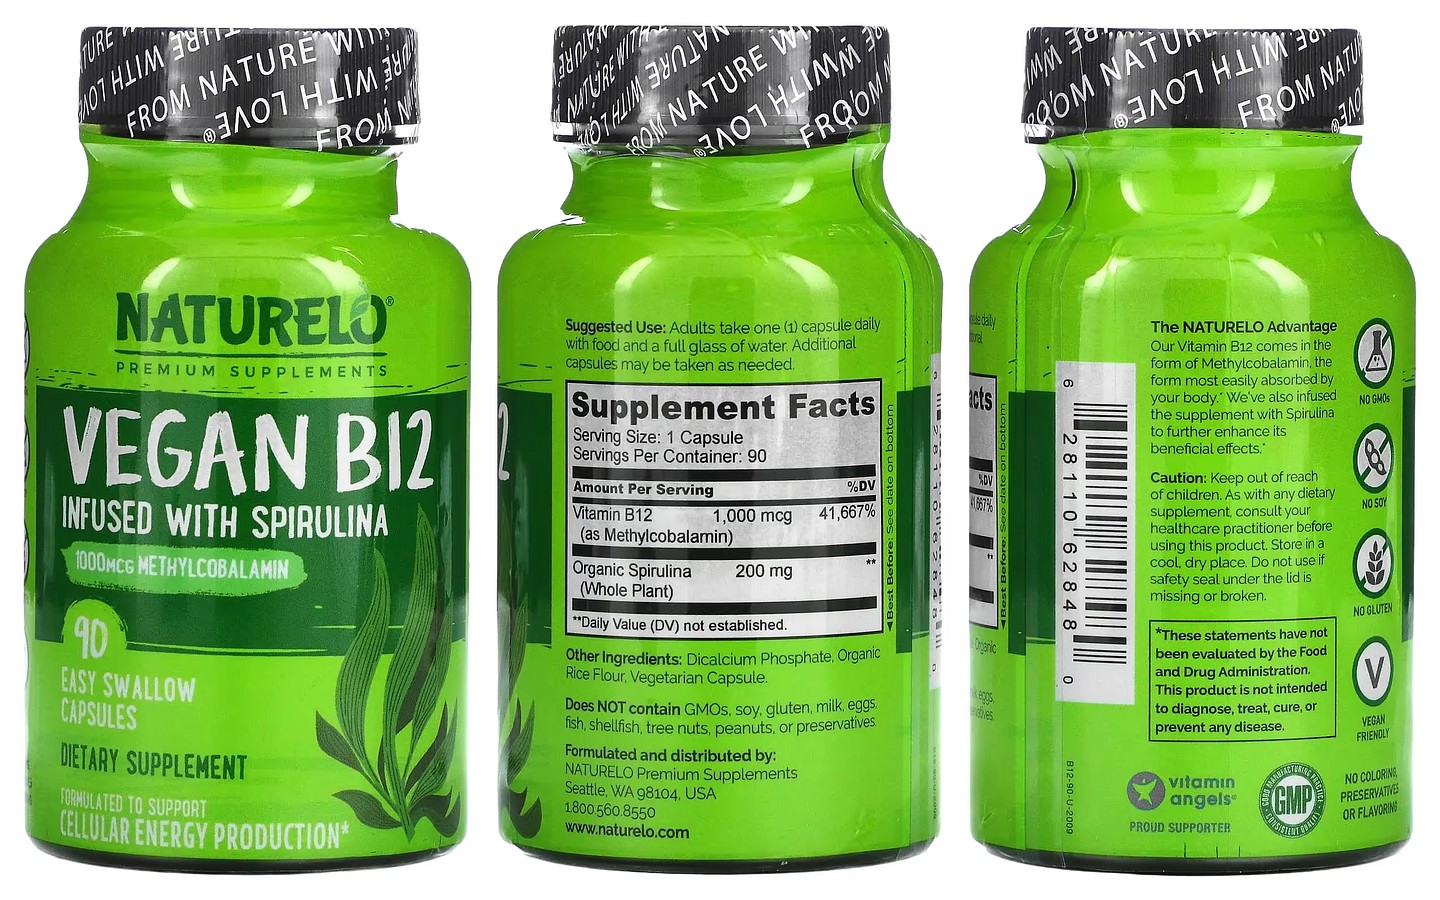 NATURELO, Vegan B12 Infused with Spirulina packaging